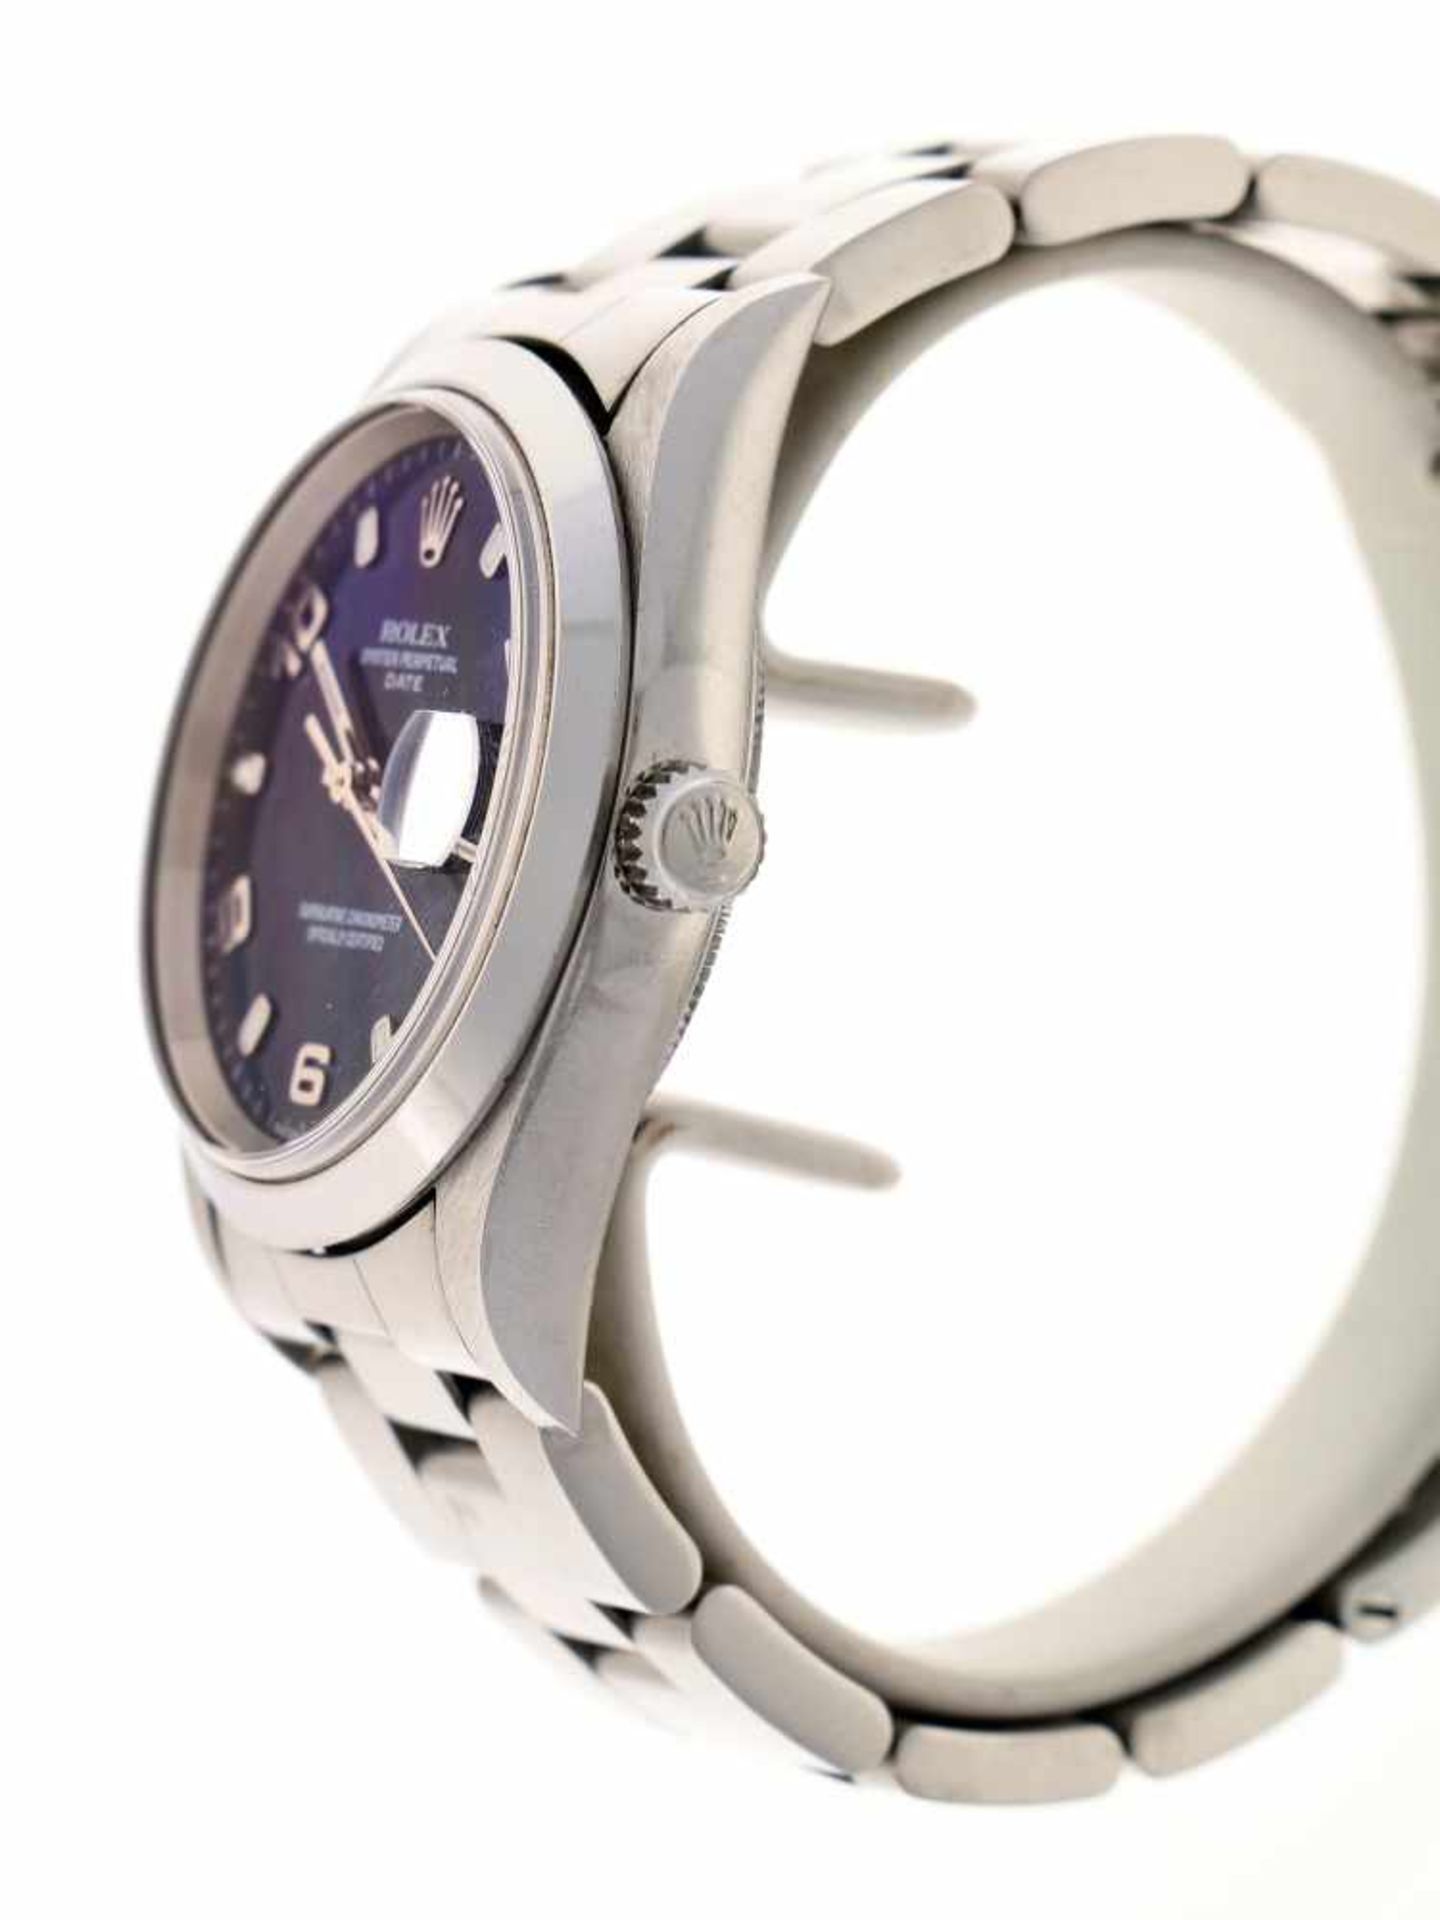 Rolex Datejust 15210 - Men's watch - Automatic - Ca. 2002. - Bild 5 aus 5